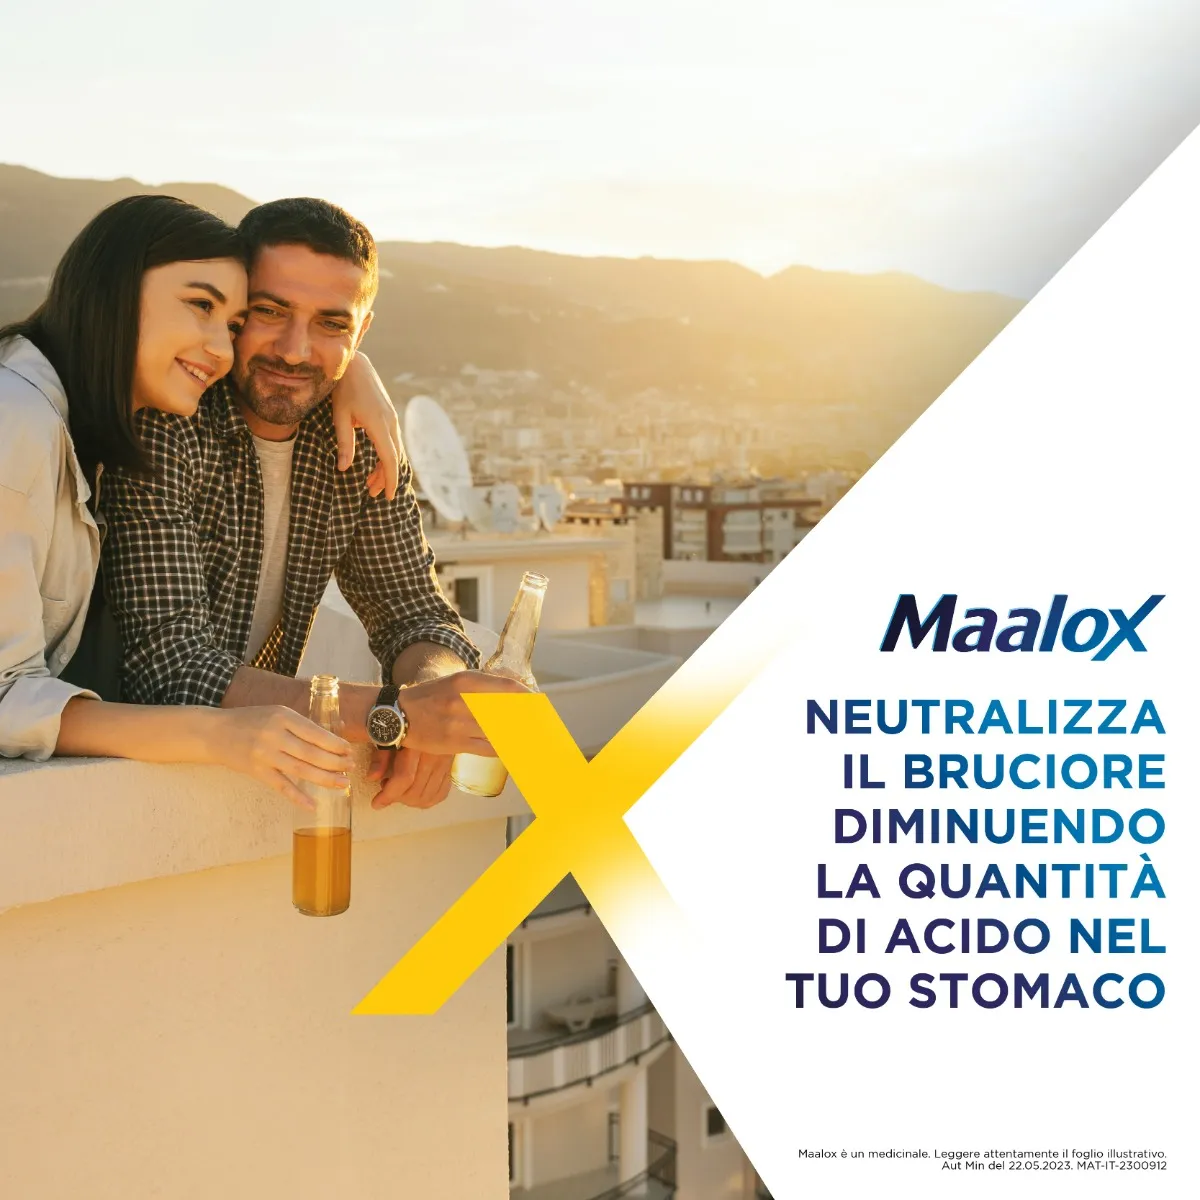 Maalox Senza Zucchero Aroma Limone 30 Compresse Masticabili Antiacido